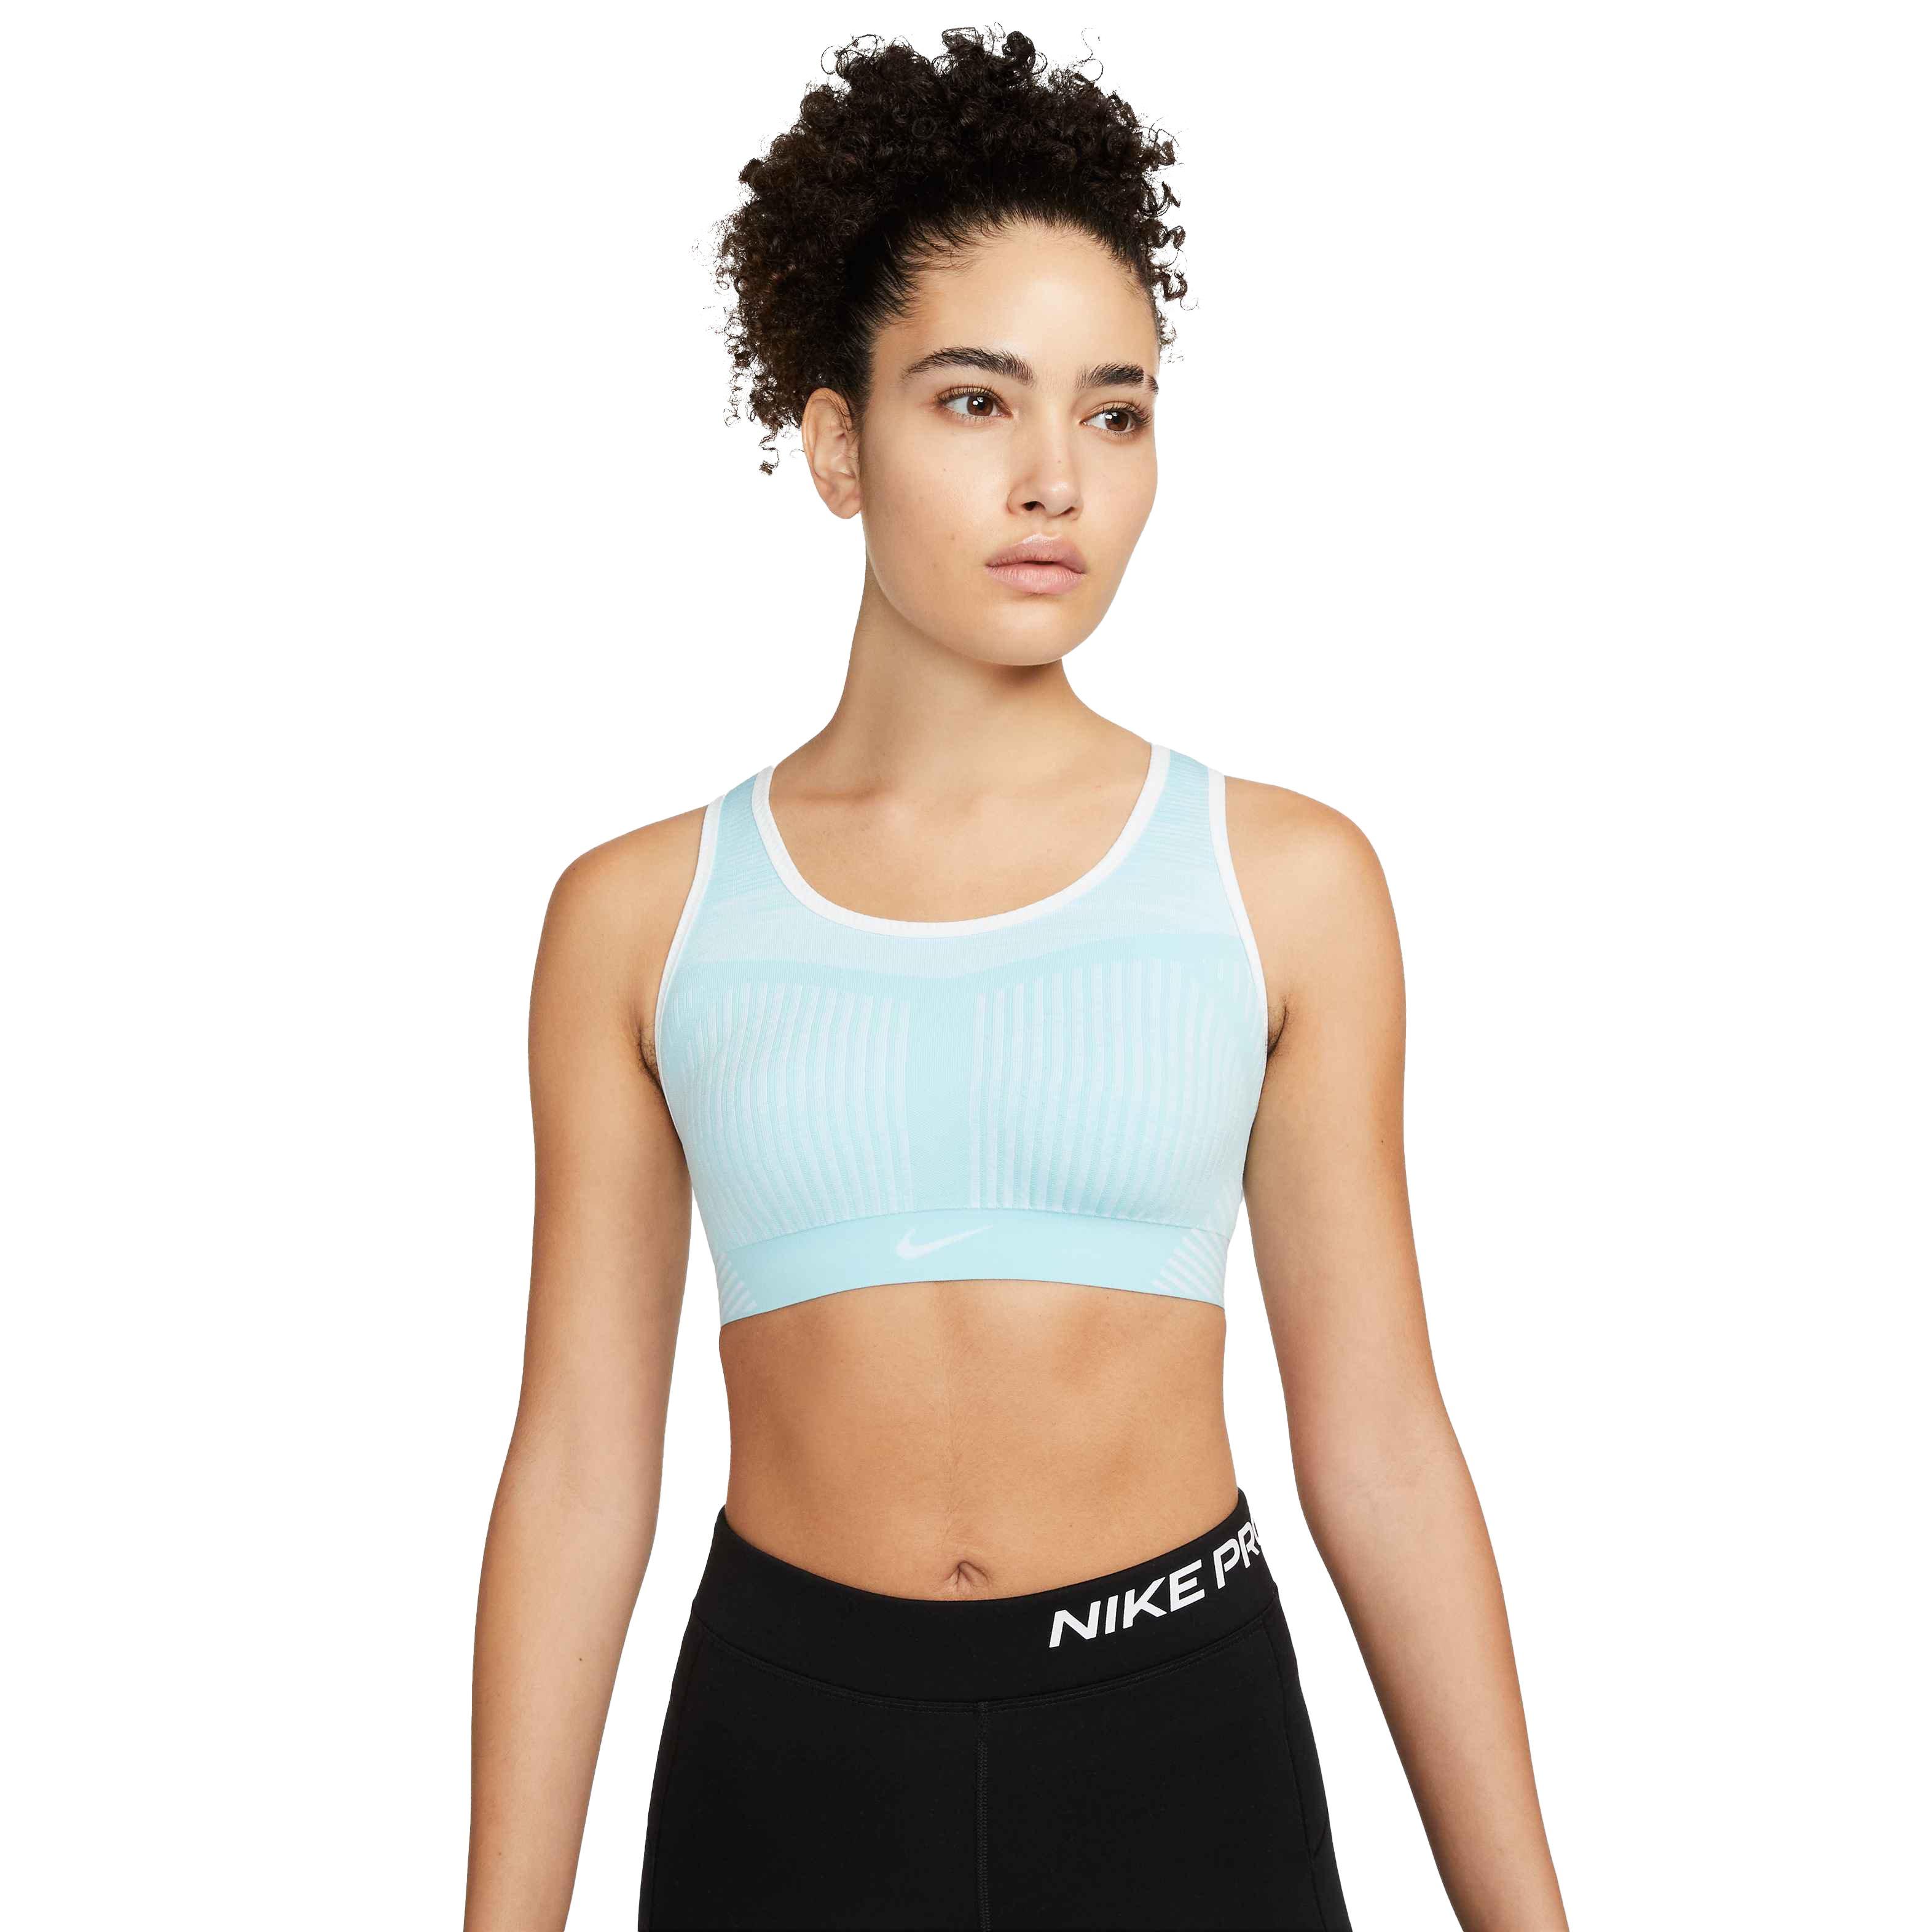 Nike Women's Sports Bras 100% Nylon Flyknit High Support AJ4047 Black  (Small)